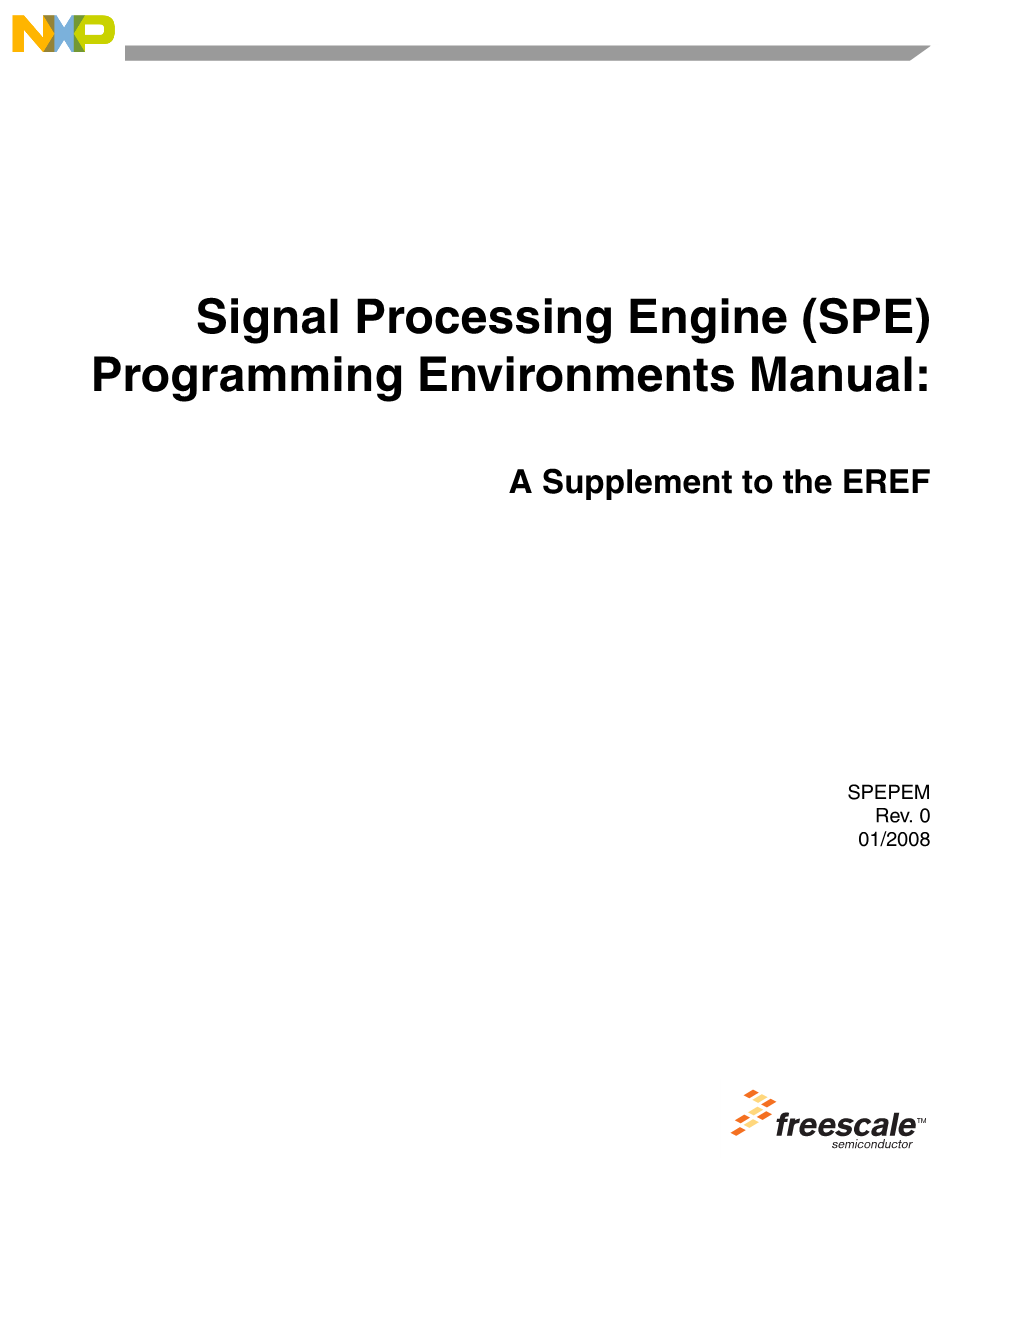 SPE) Programming Environments Manual